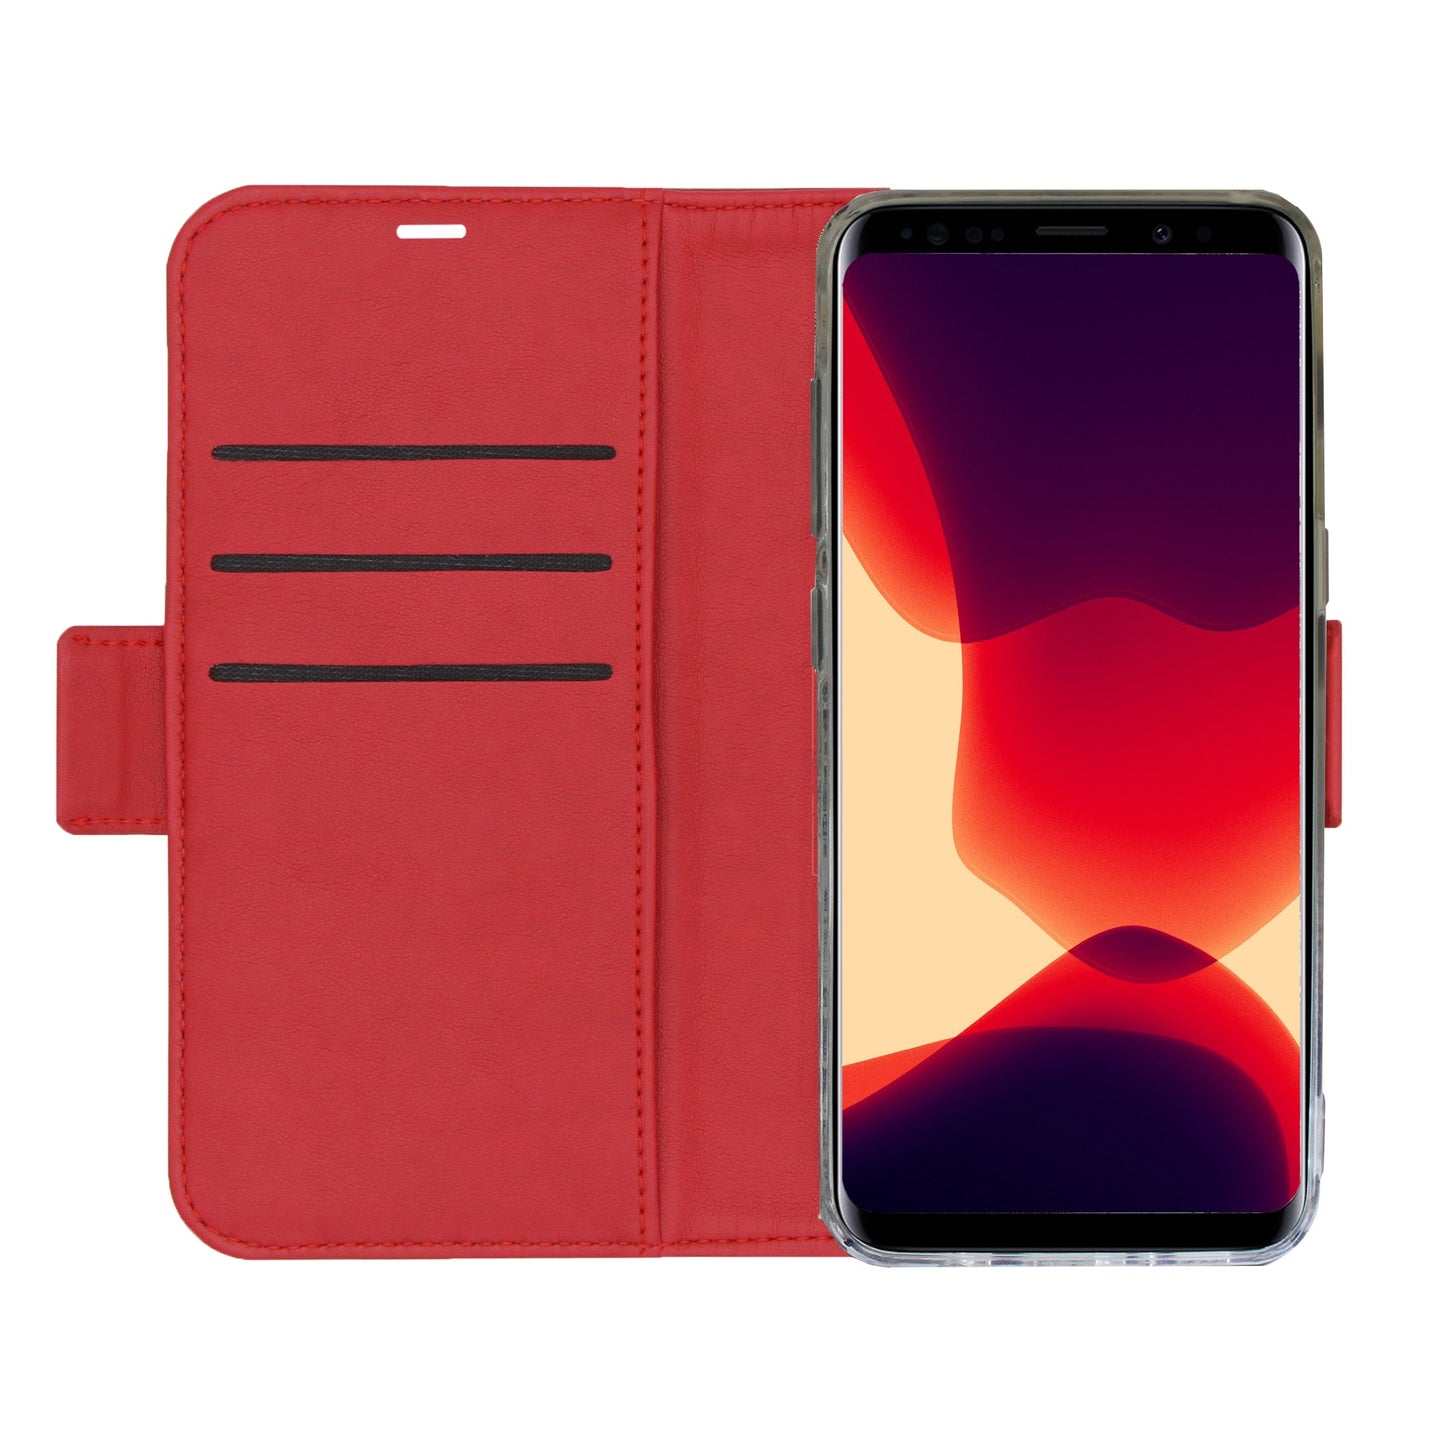 Coque Uni Rouge Victor pour Samsung Galaxy S9